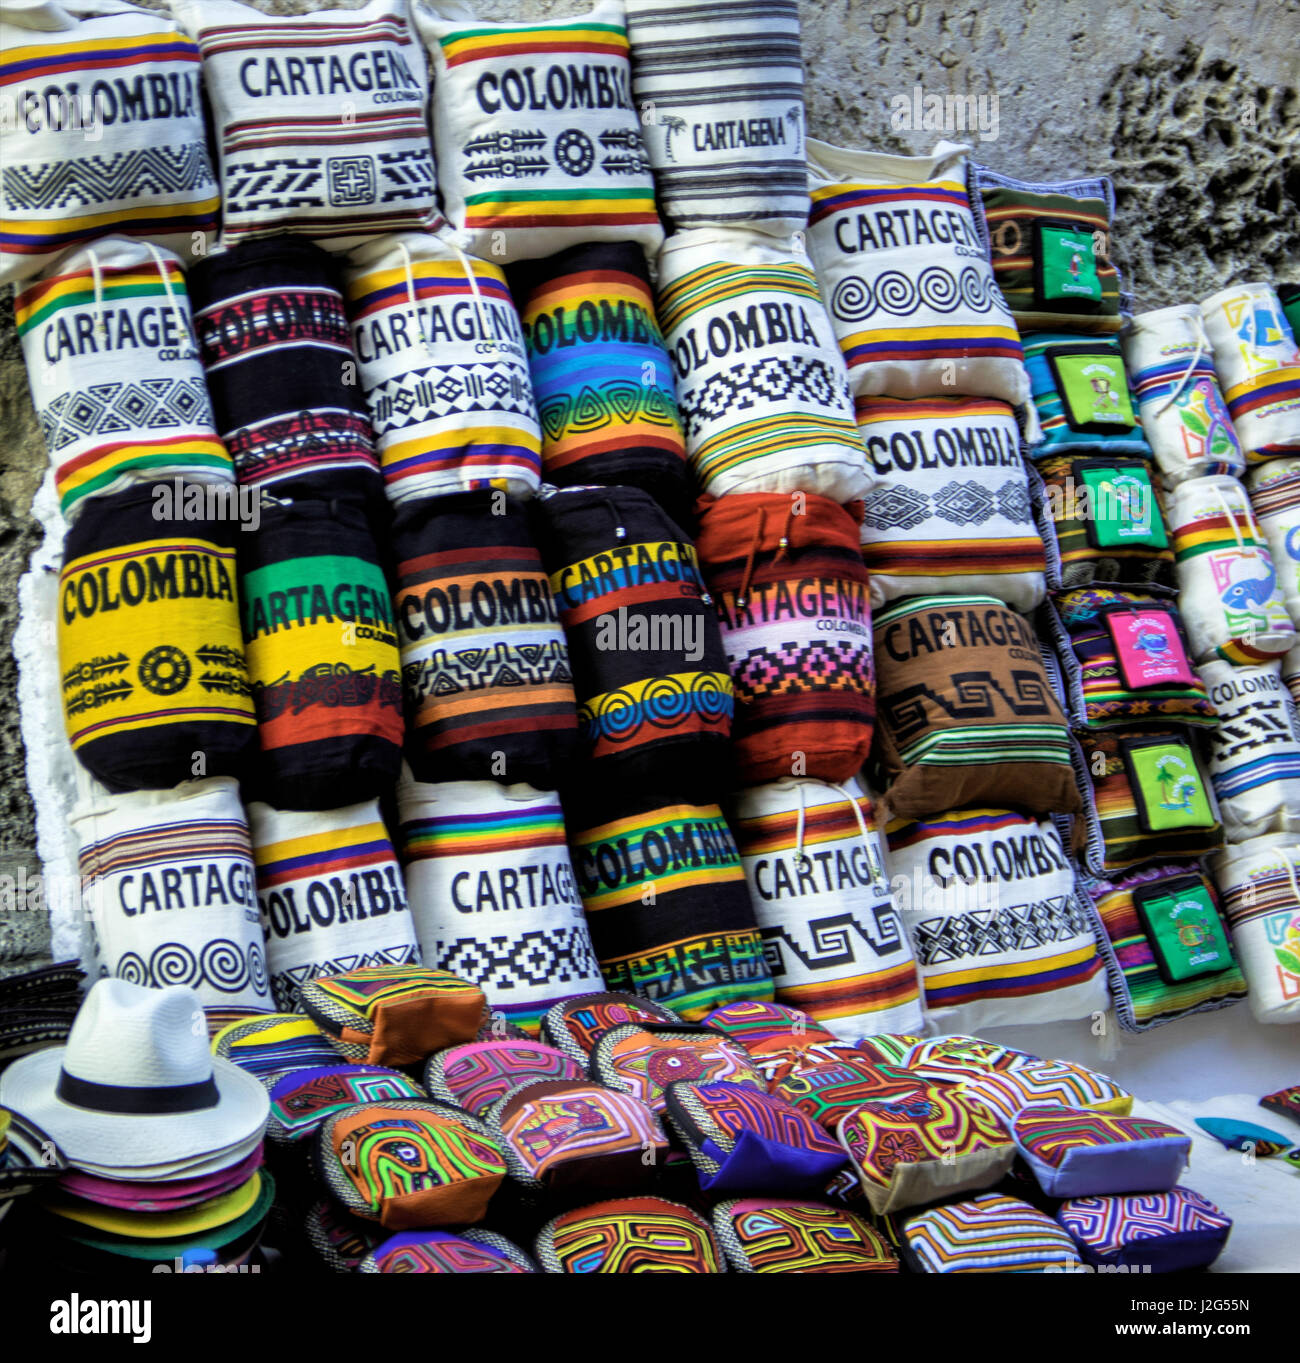 Souvenir vendor cartagena colombia hi-res stock photography and images -  Alamy